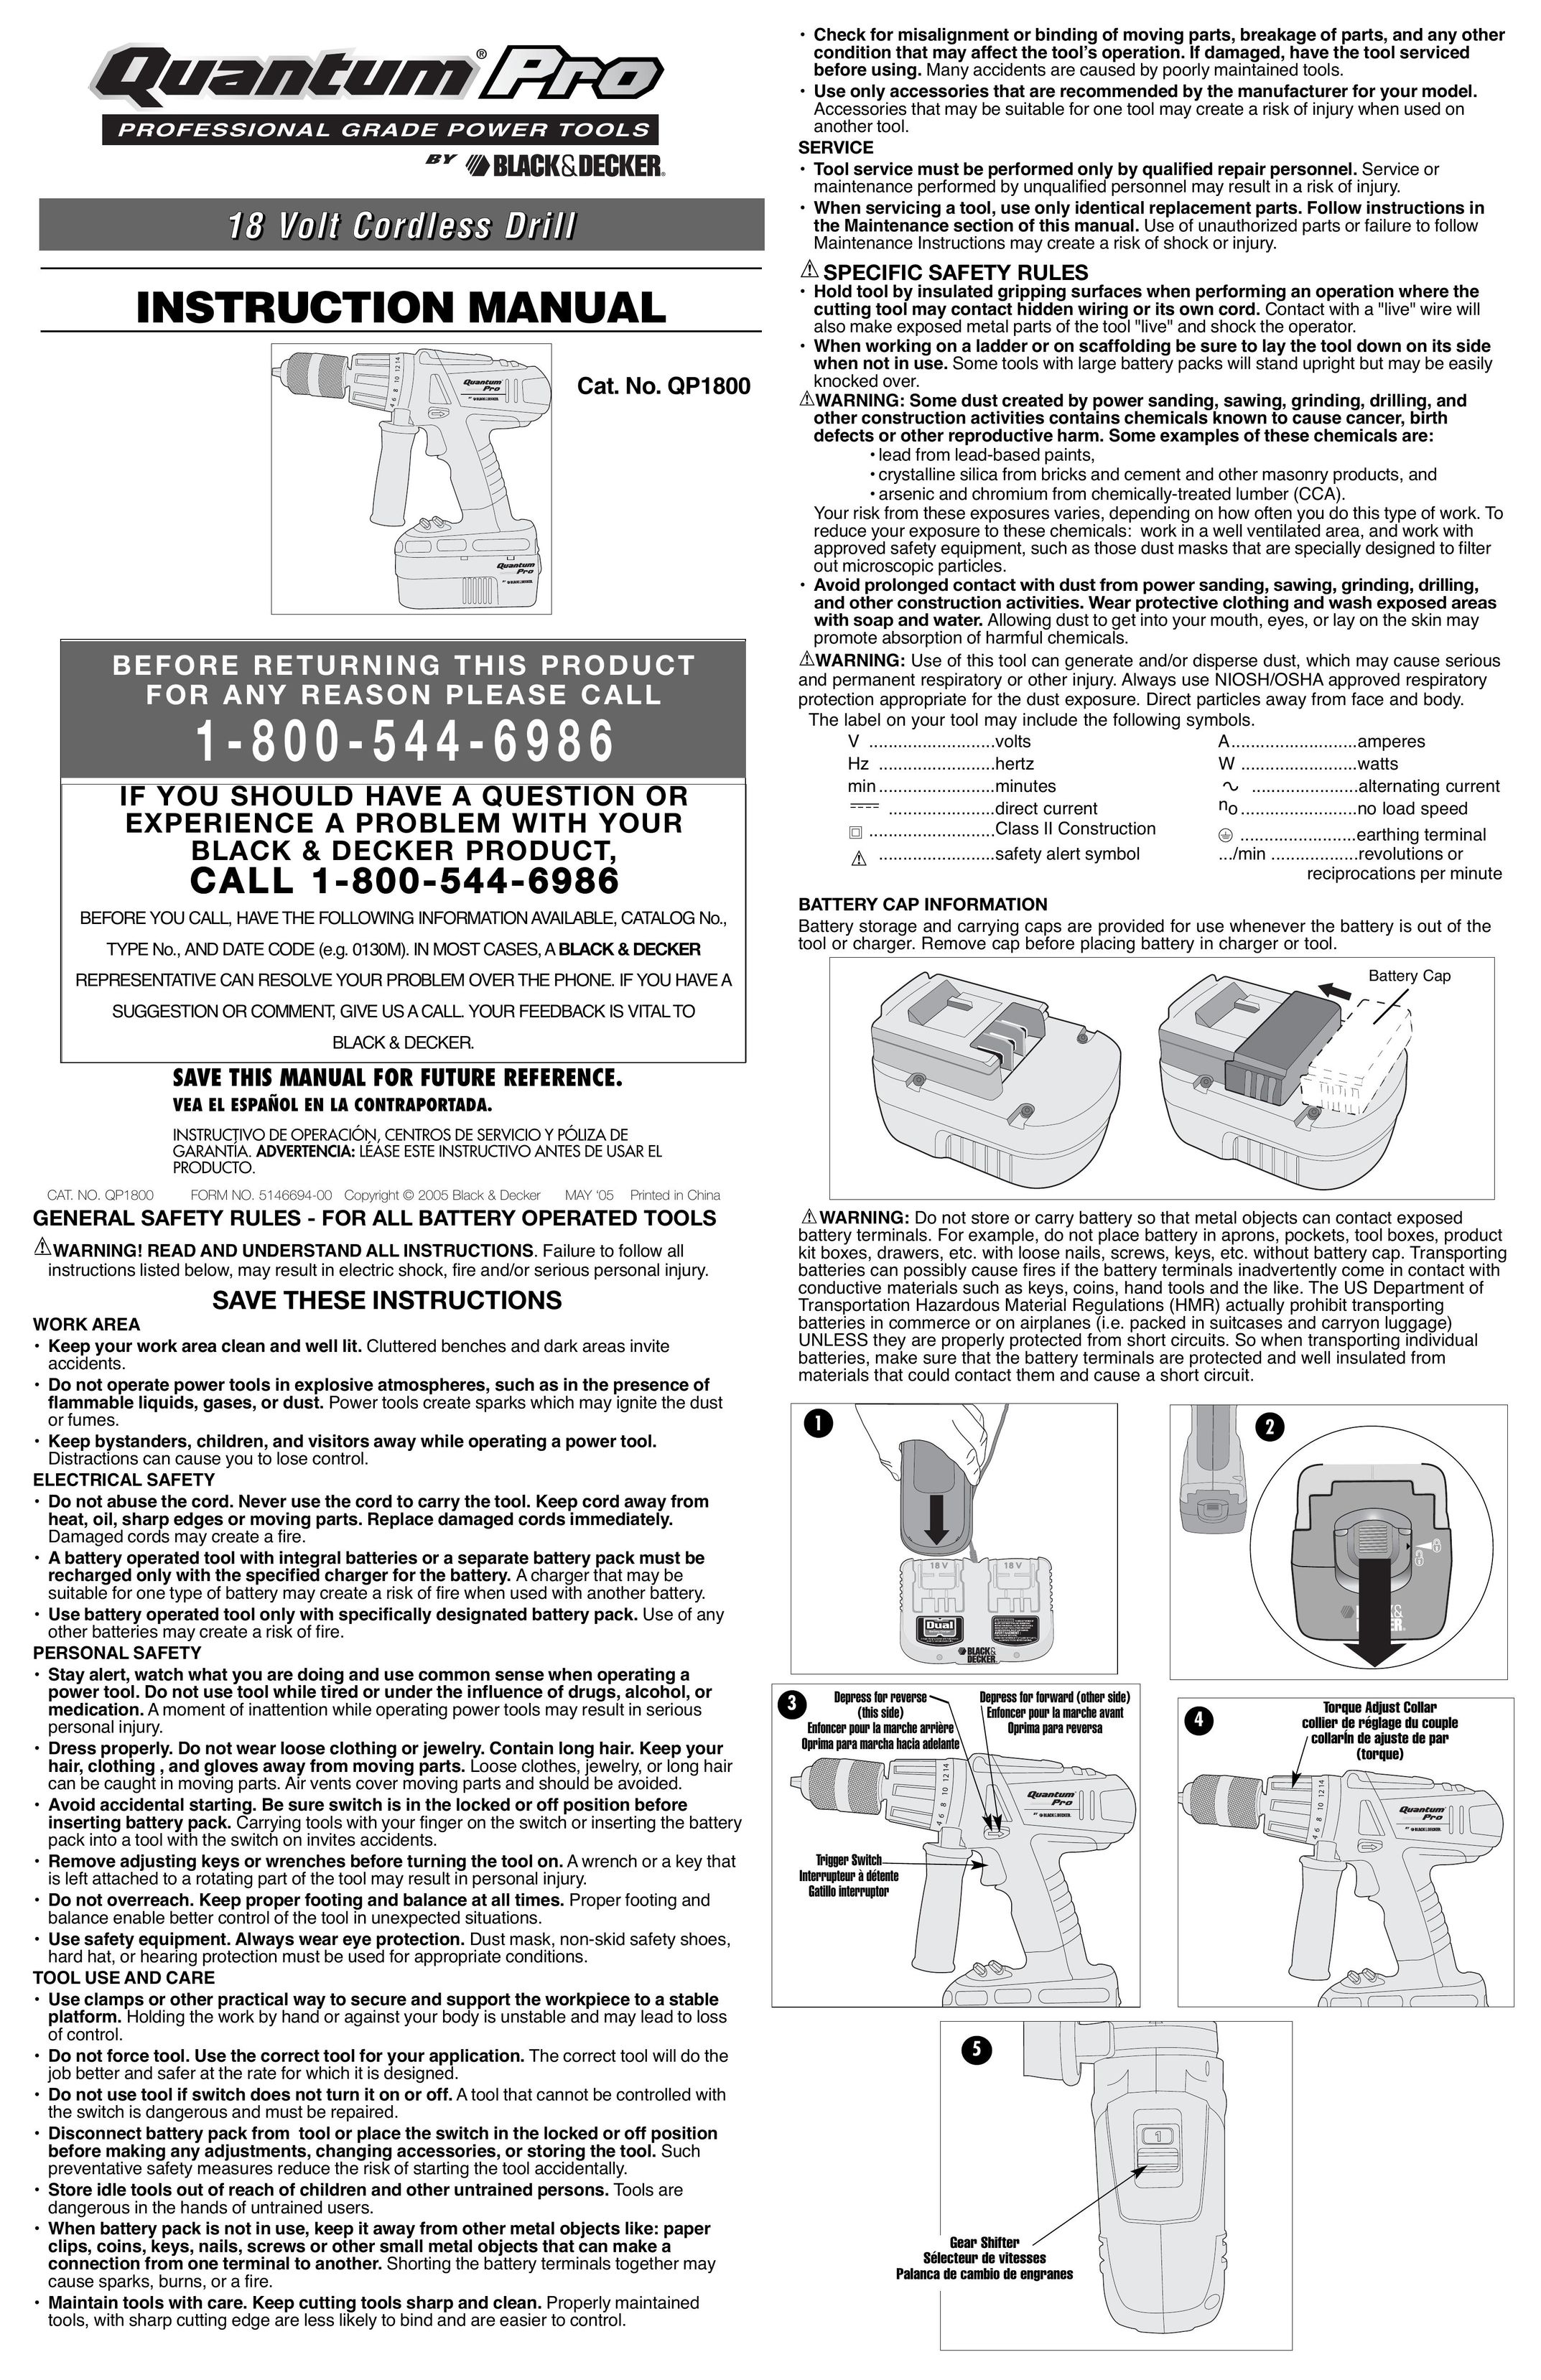 Black & Decker 5146694-00 Cordless Drill User Manual